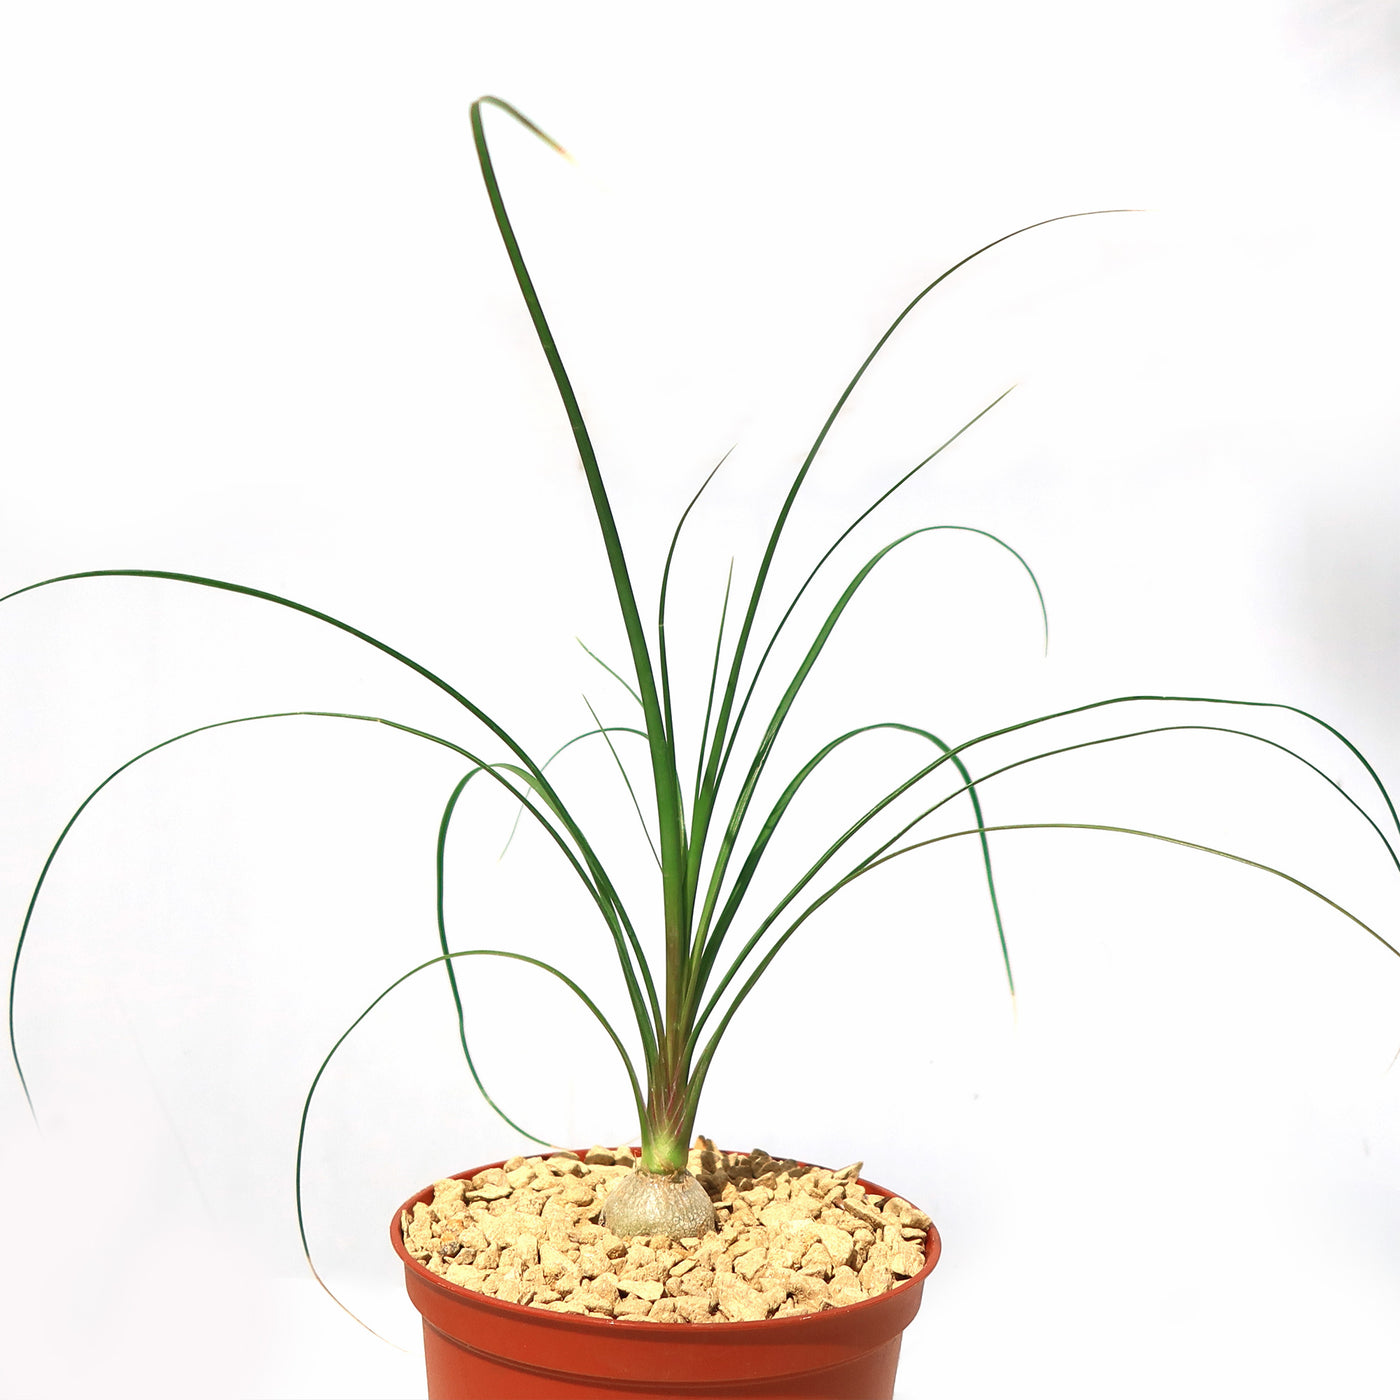 Ponytail palm 'Beaucarnea Recurvata'